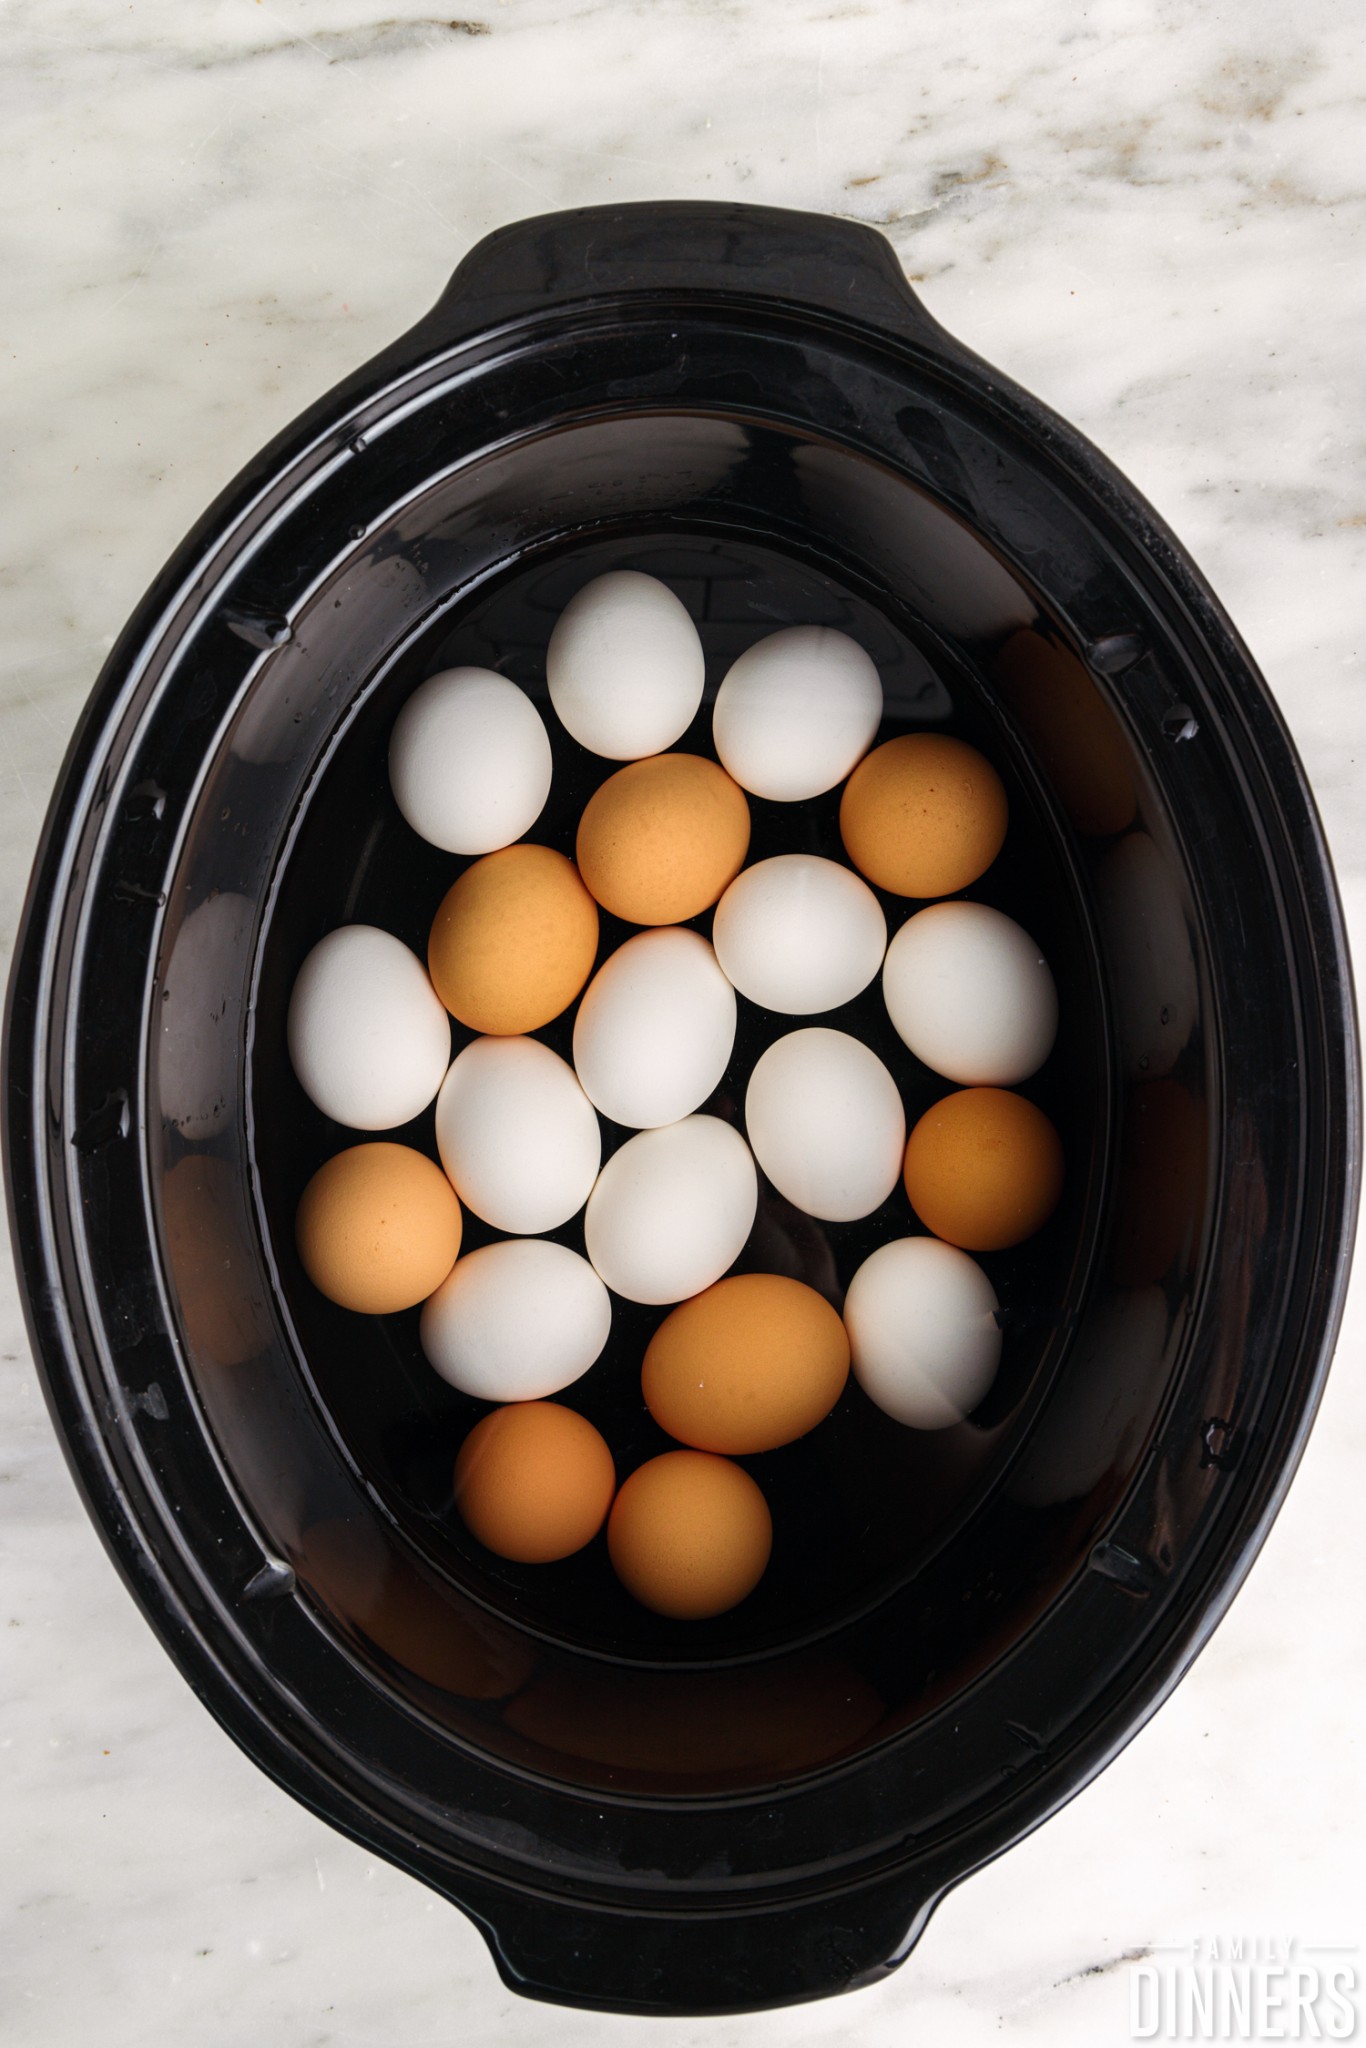 Eggs in a crock pot.